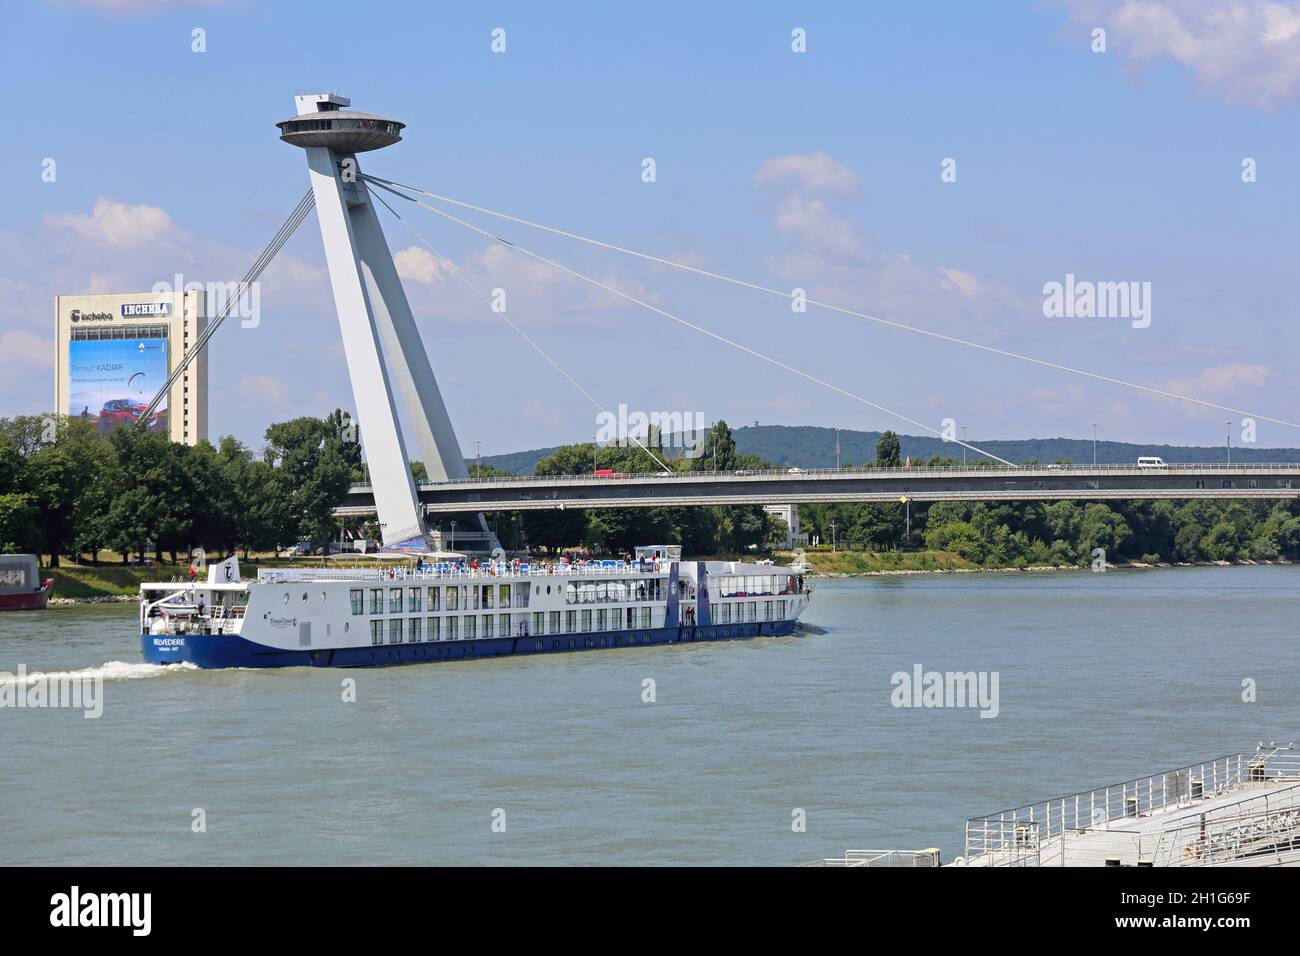 Bratislava, Slovakia - July 10, 2015: Cruiser Ship at River Danube Pass Under Famous UFO Bridge in Bratislava, Slovakia. Stock Photo